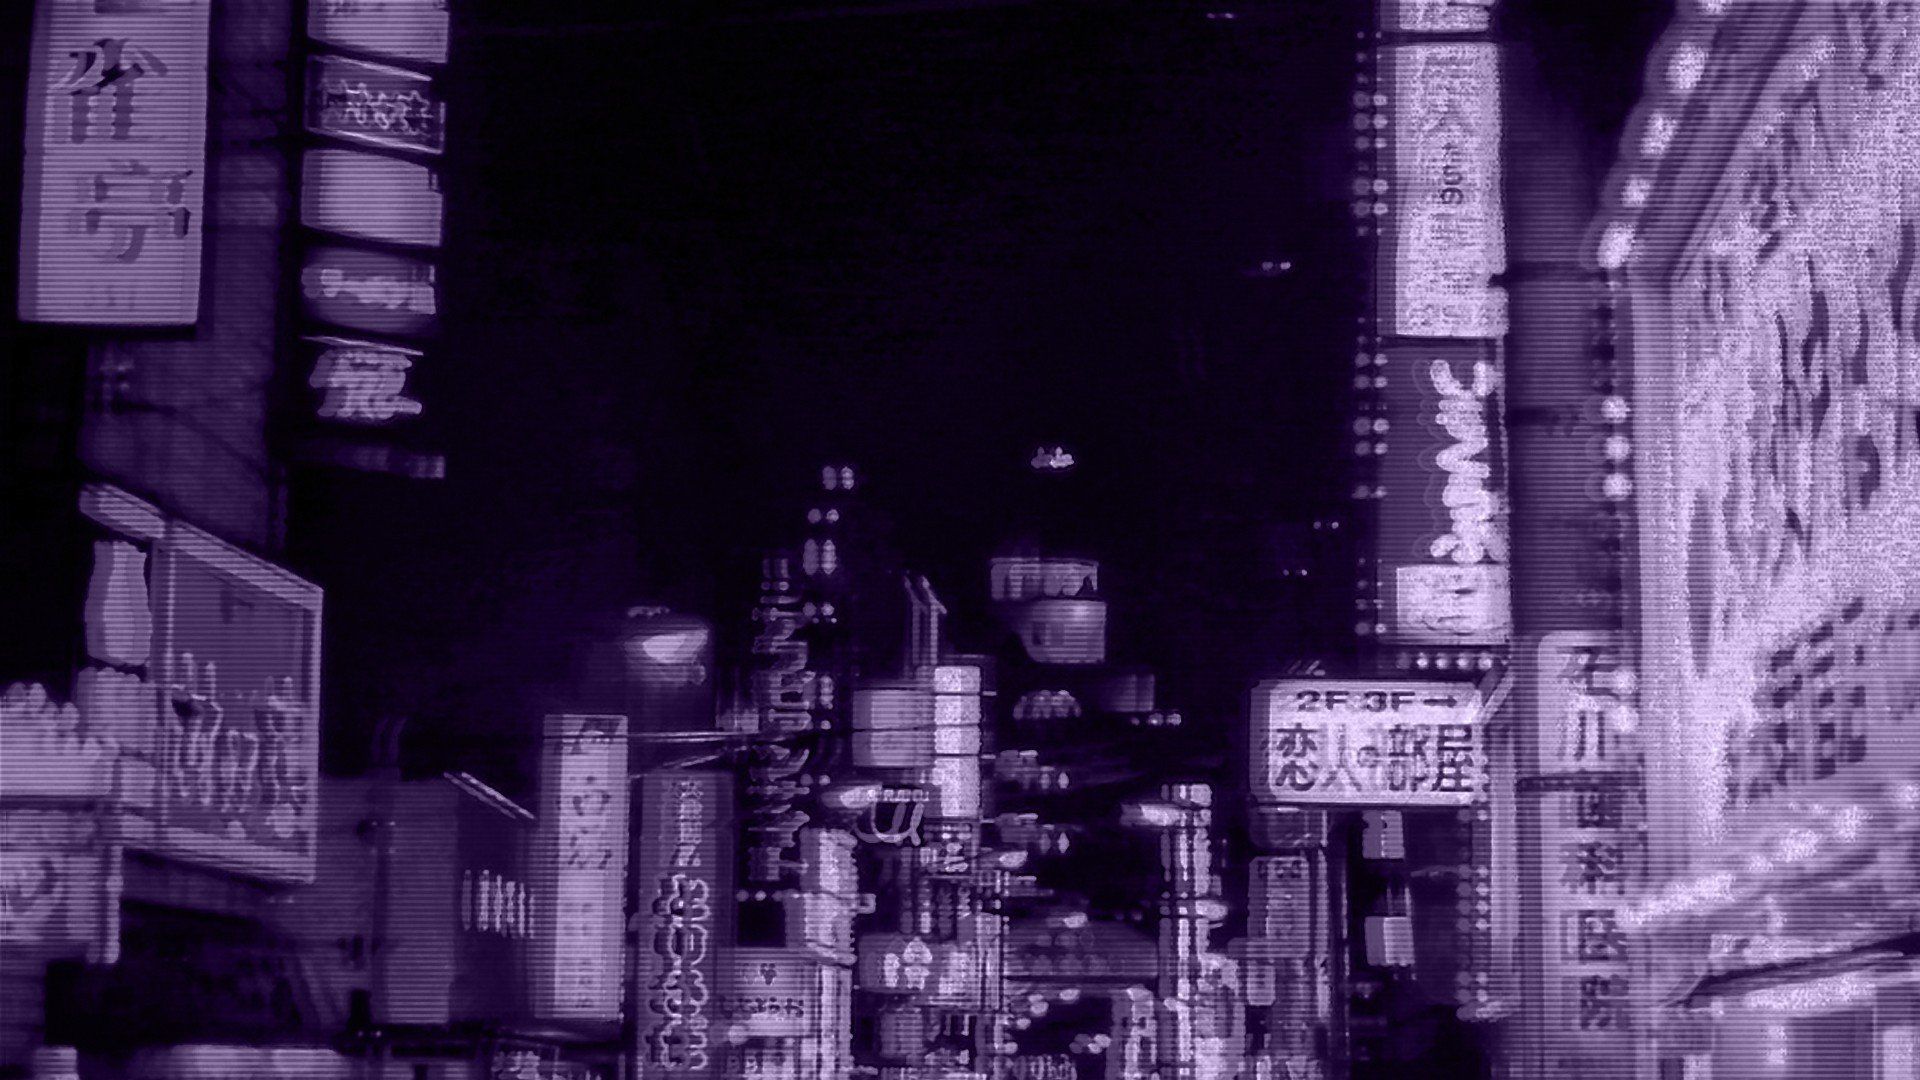 Aesthetic Anime City Desktop Wallpapers - Wallpaper Cave